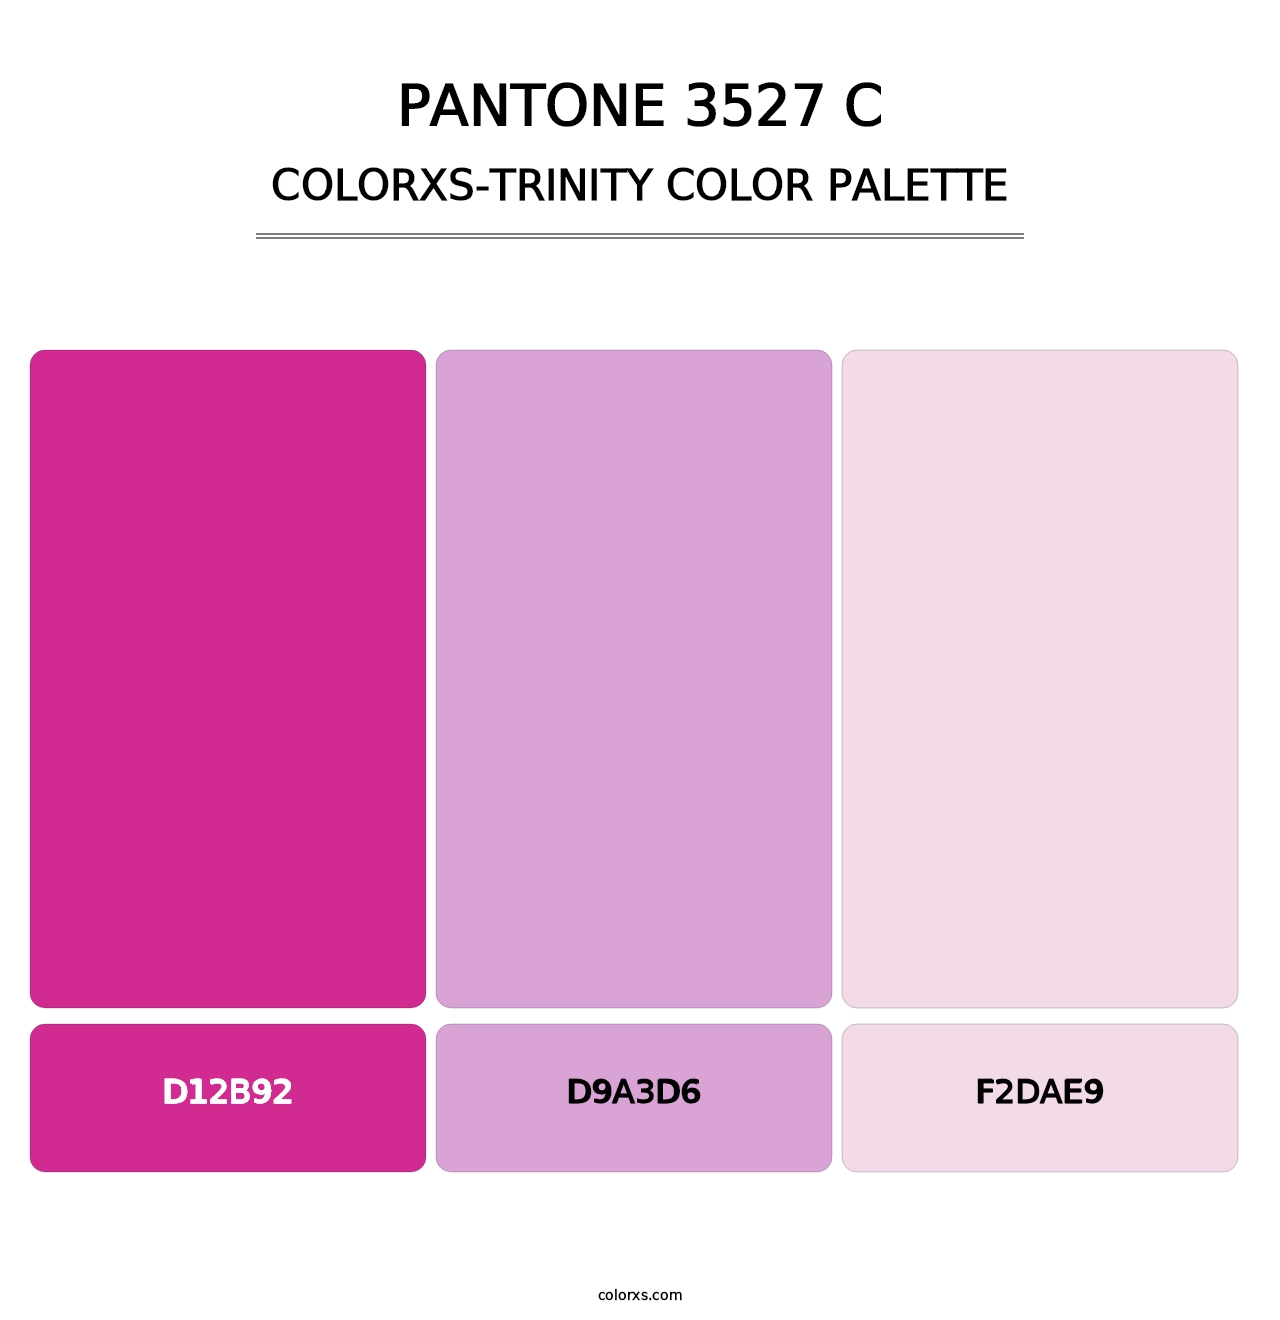 PANTONE 3527 C - Colorxs Trinity Palette